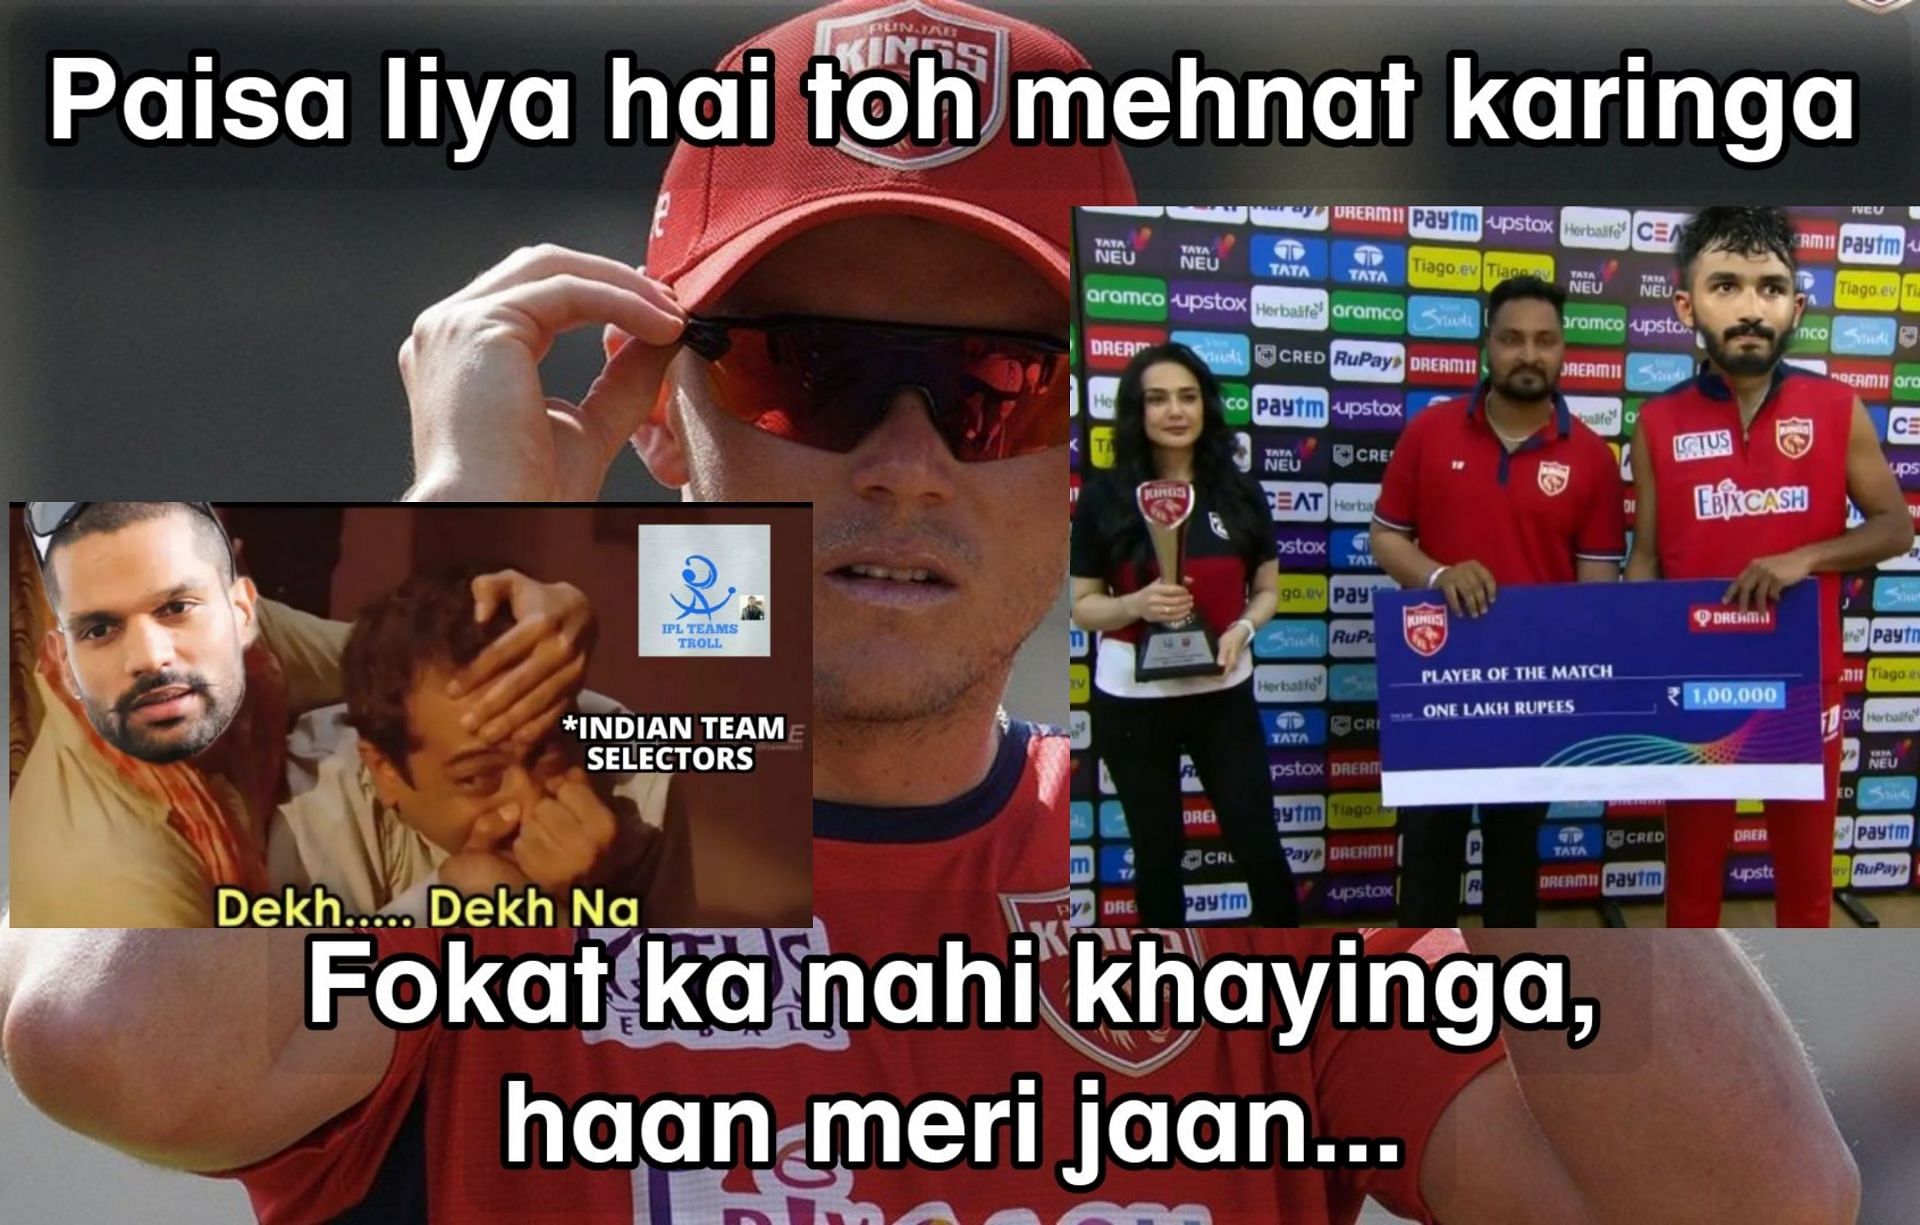 RR vs PBKS memes, IPL 2023: Top 10 funny memes from the latest match